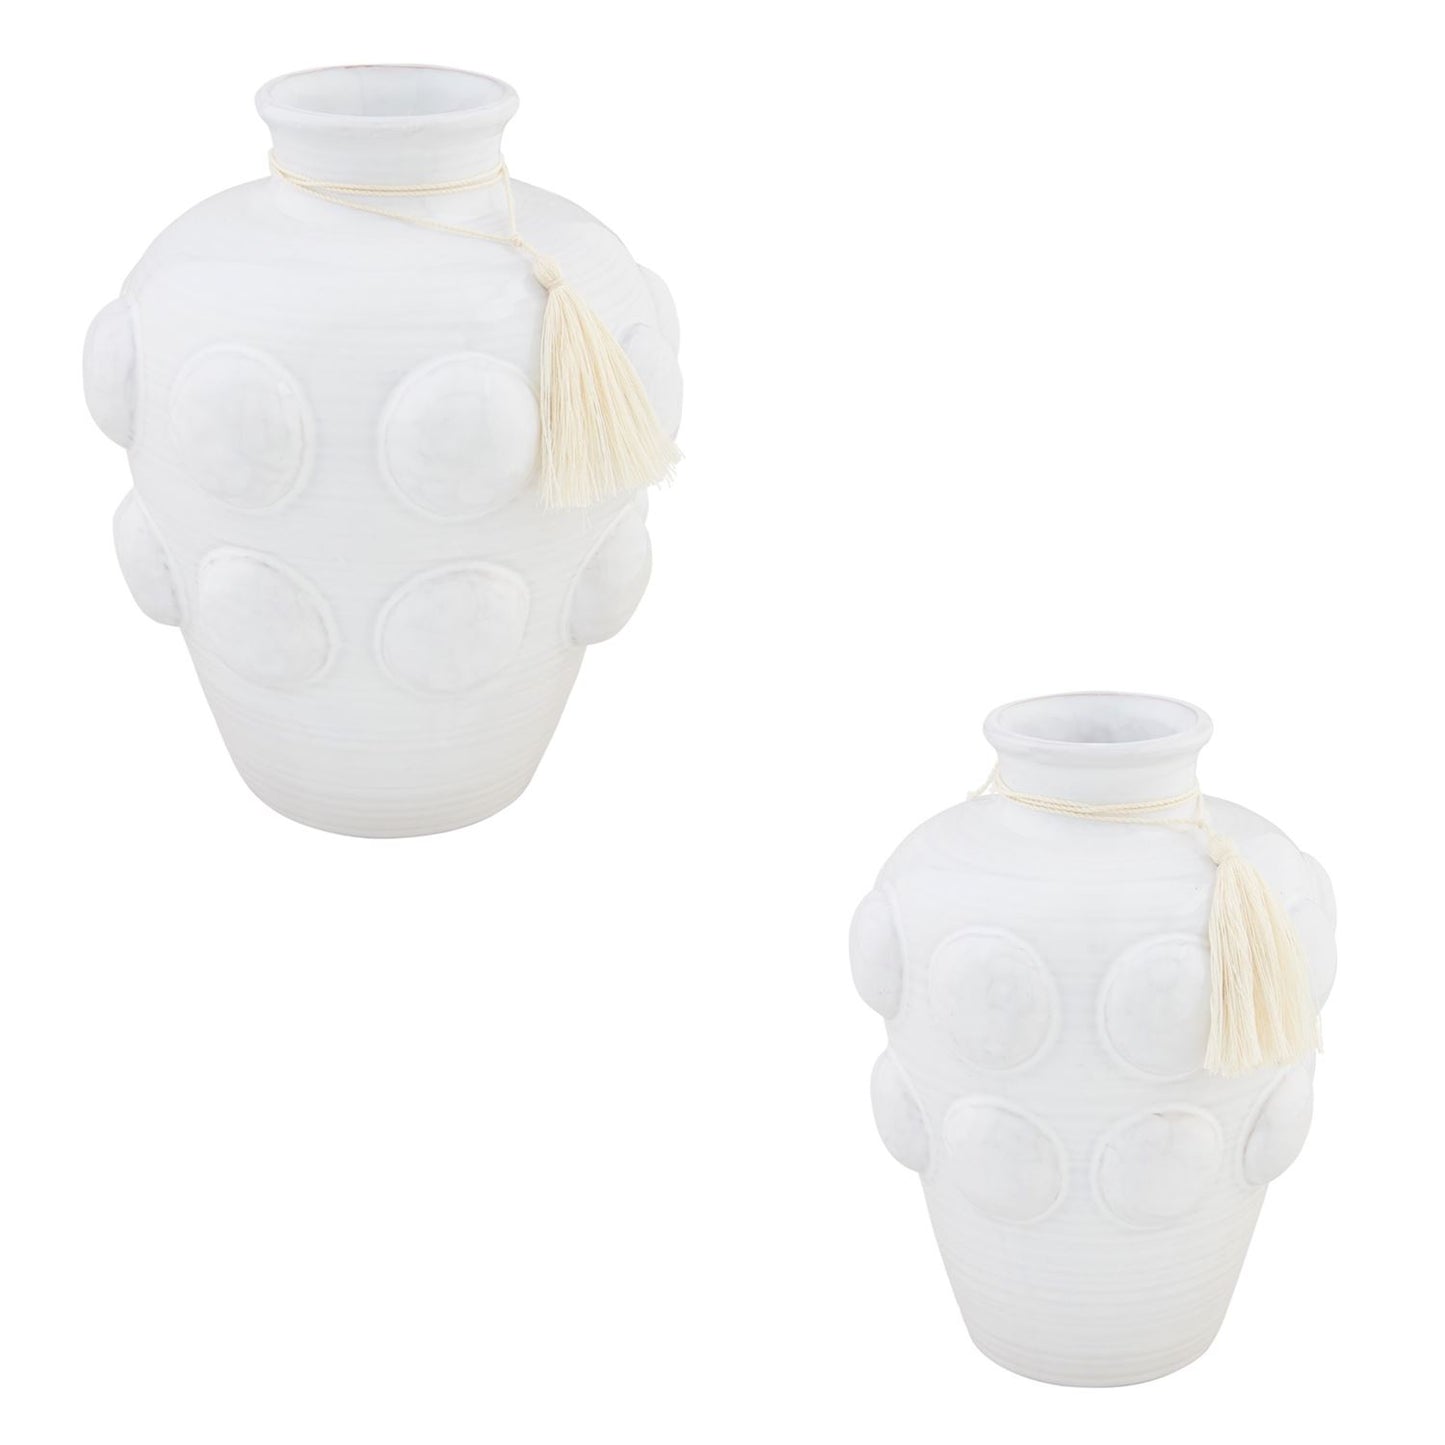 both sizes of raised dot vases on a white background.